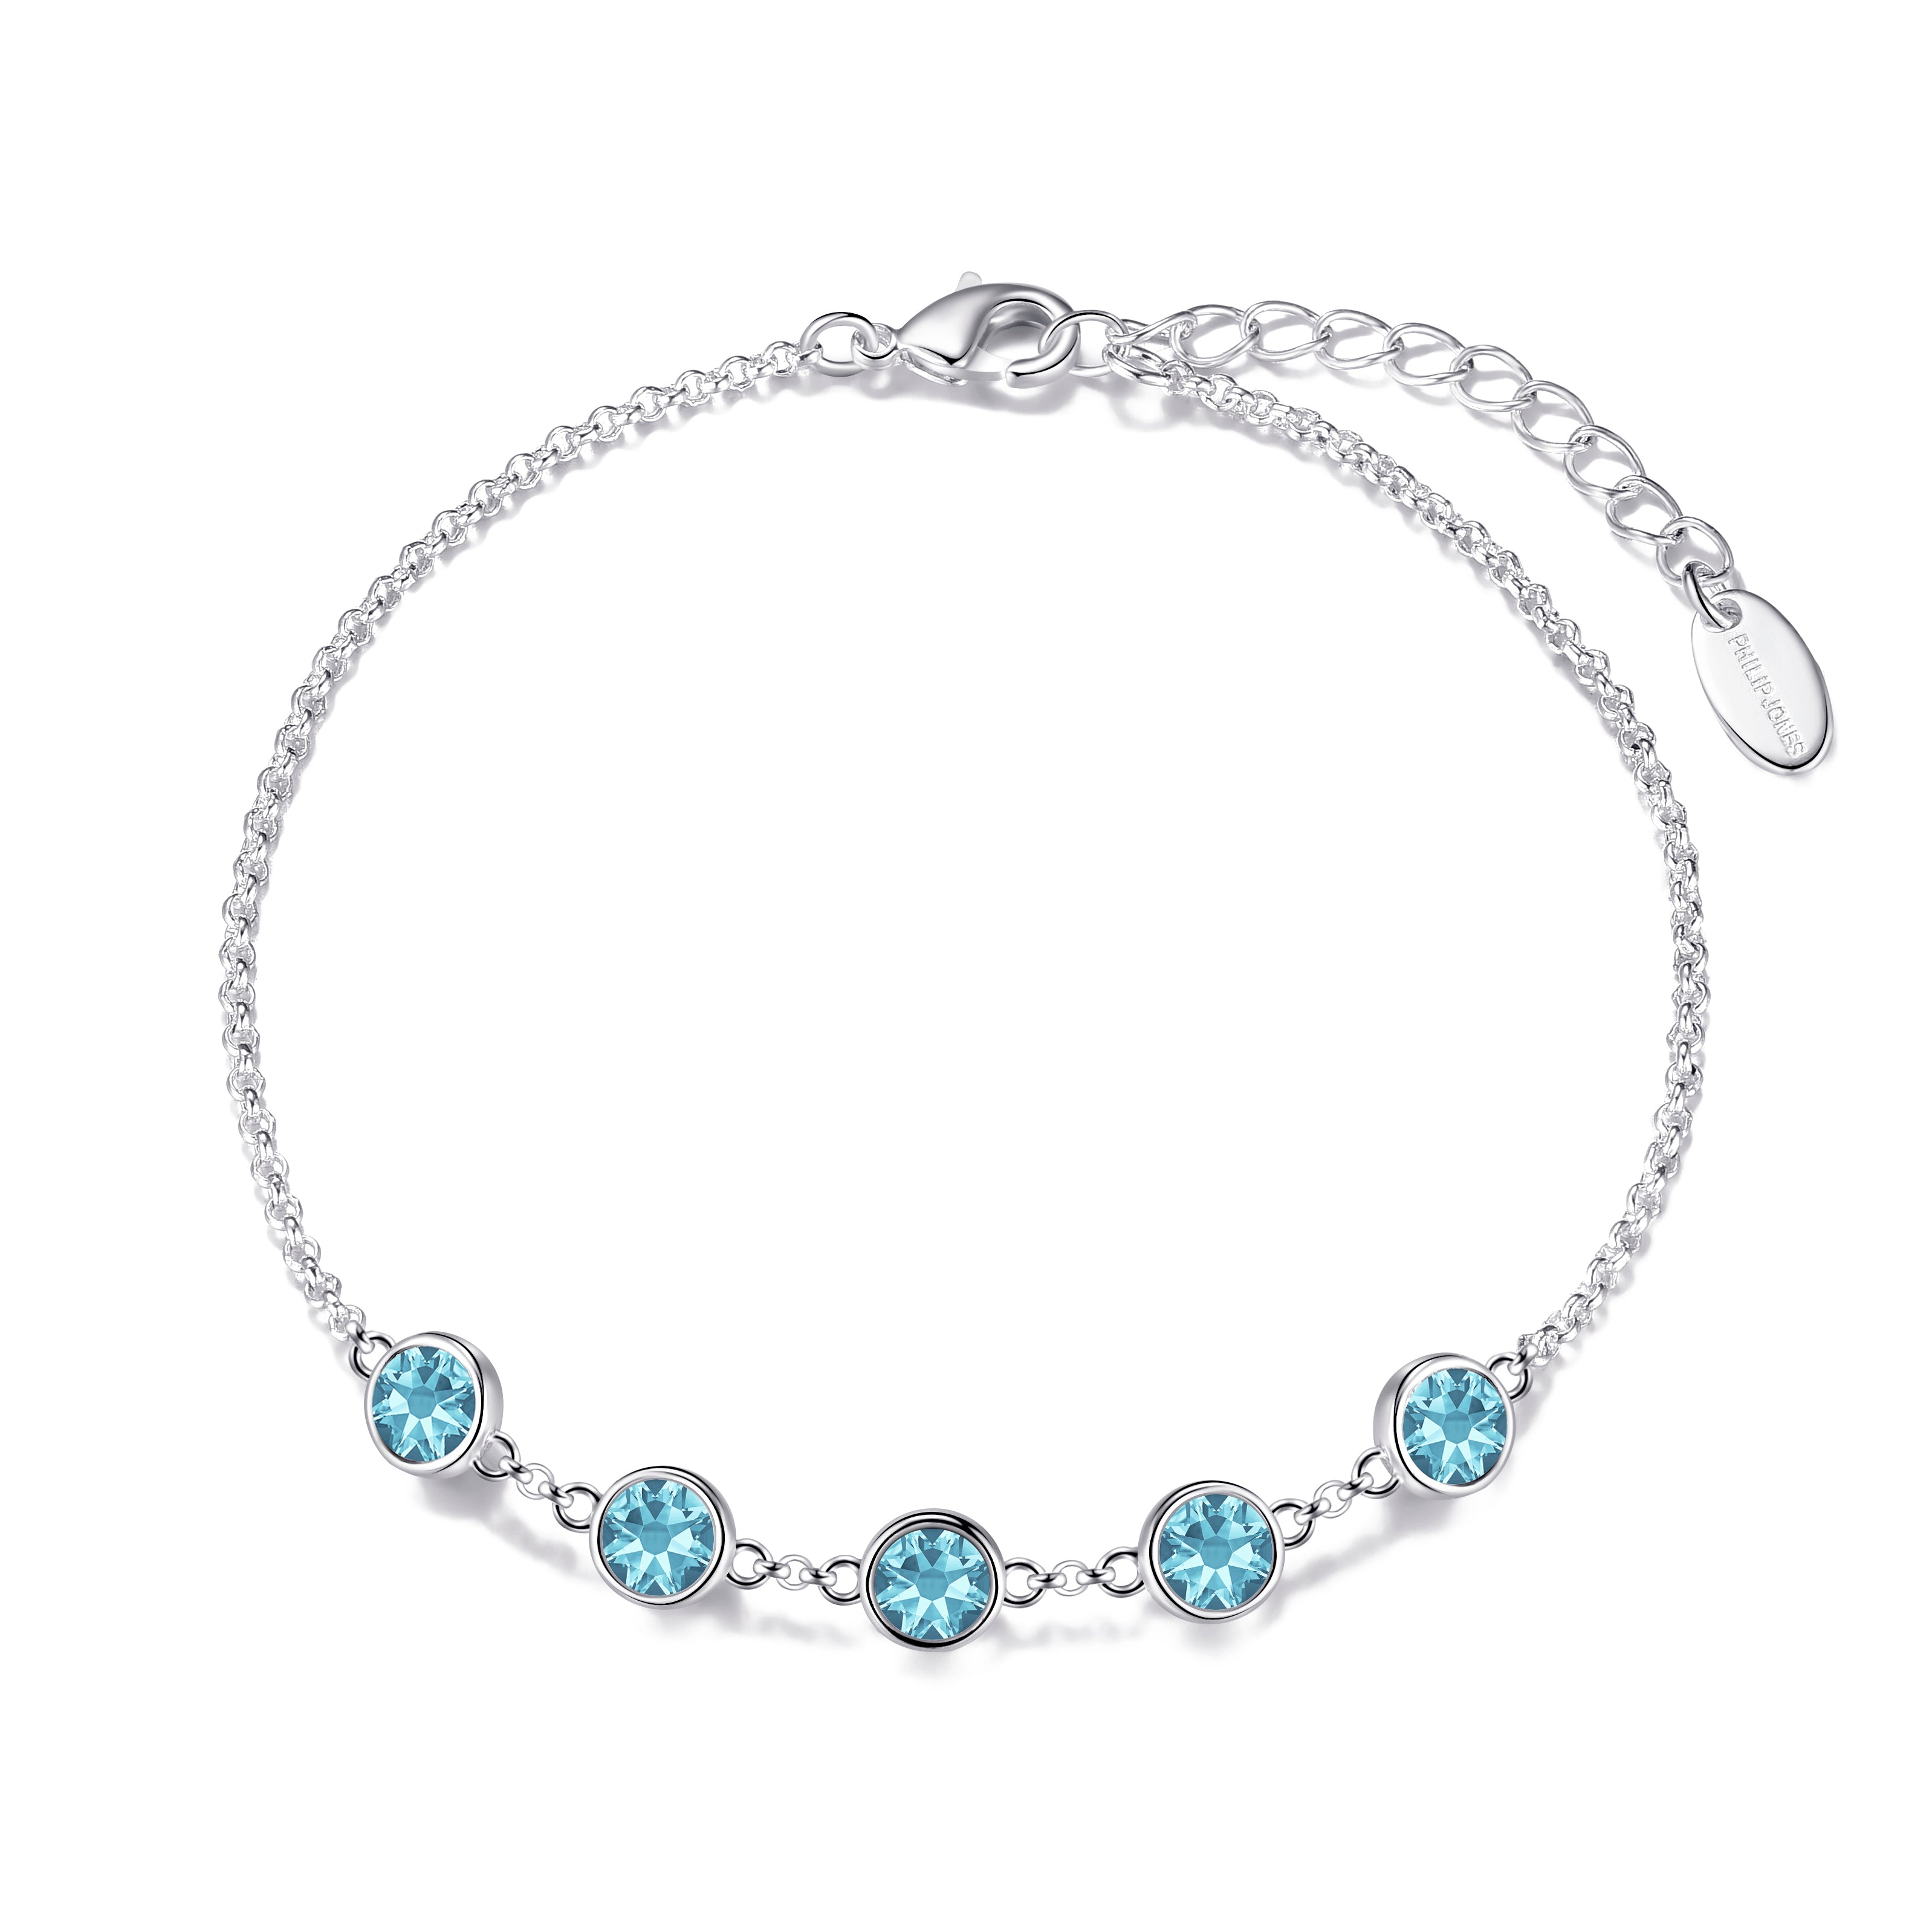 Light Blue Crystal Chain Bracelet Created with Zircondia® Crystals by Philip Jones Jewellery